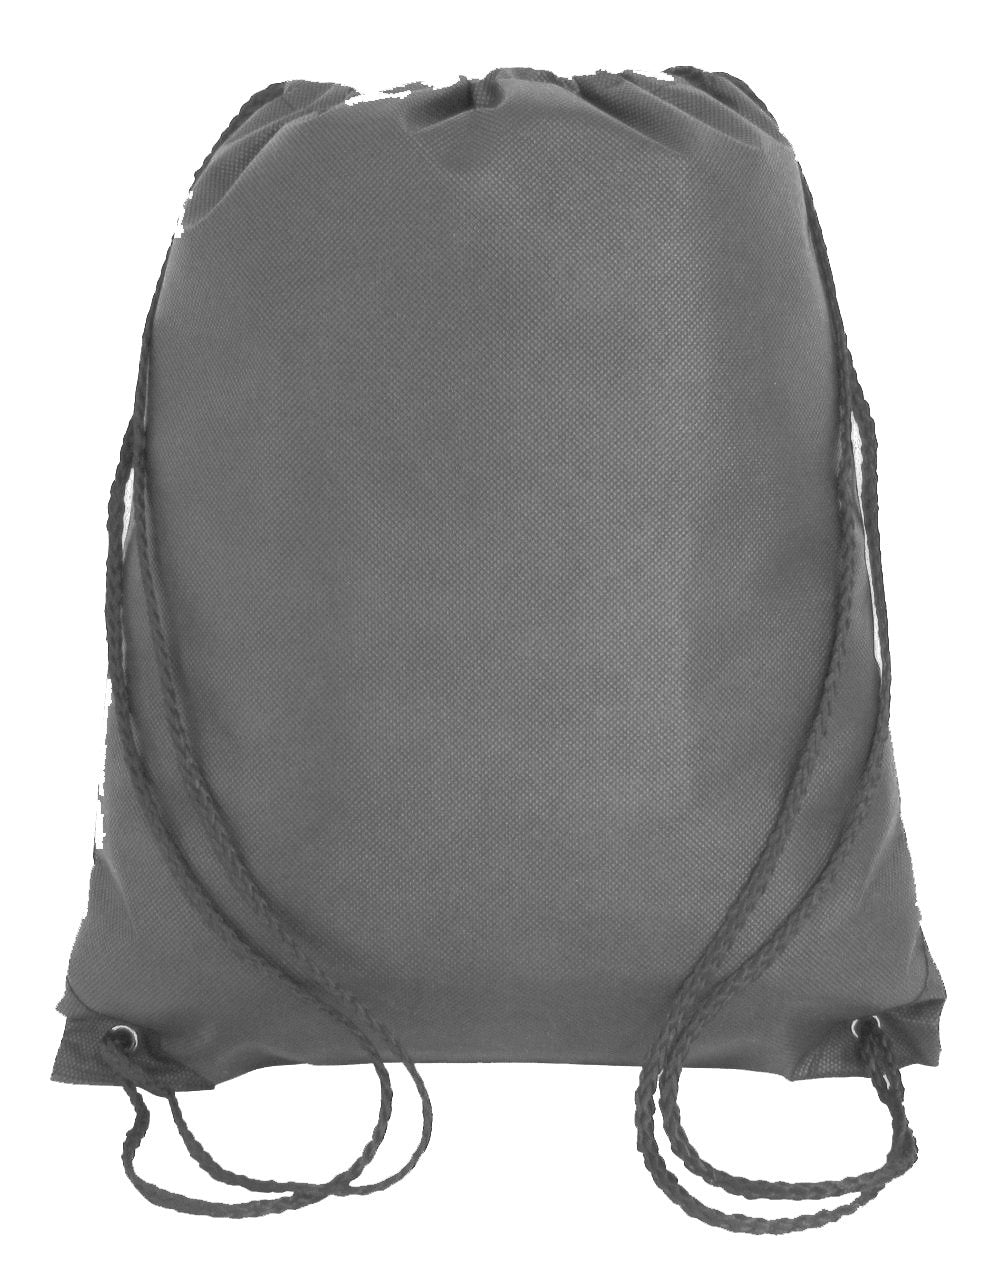 Grey color Drawstring Bag Small Size